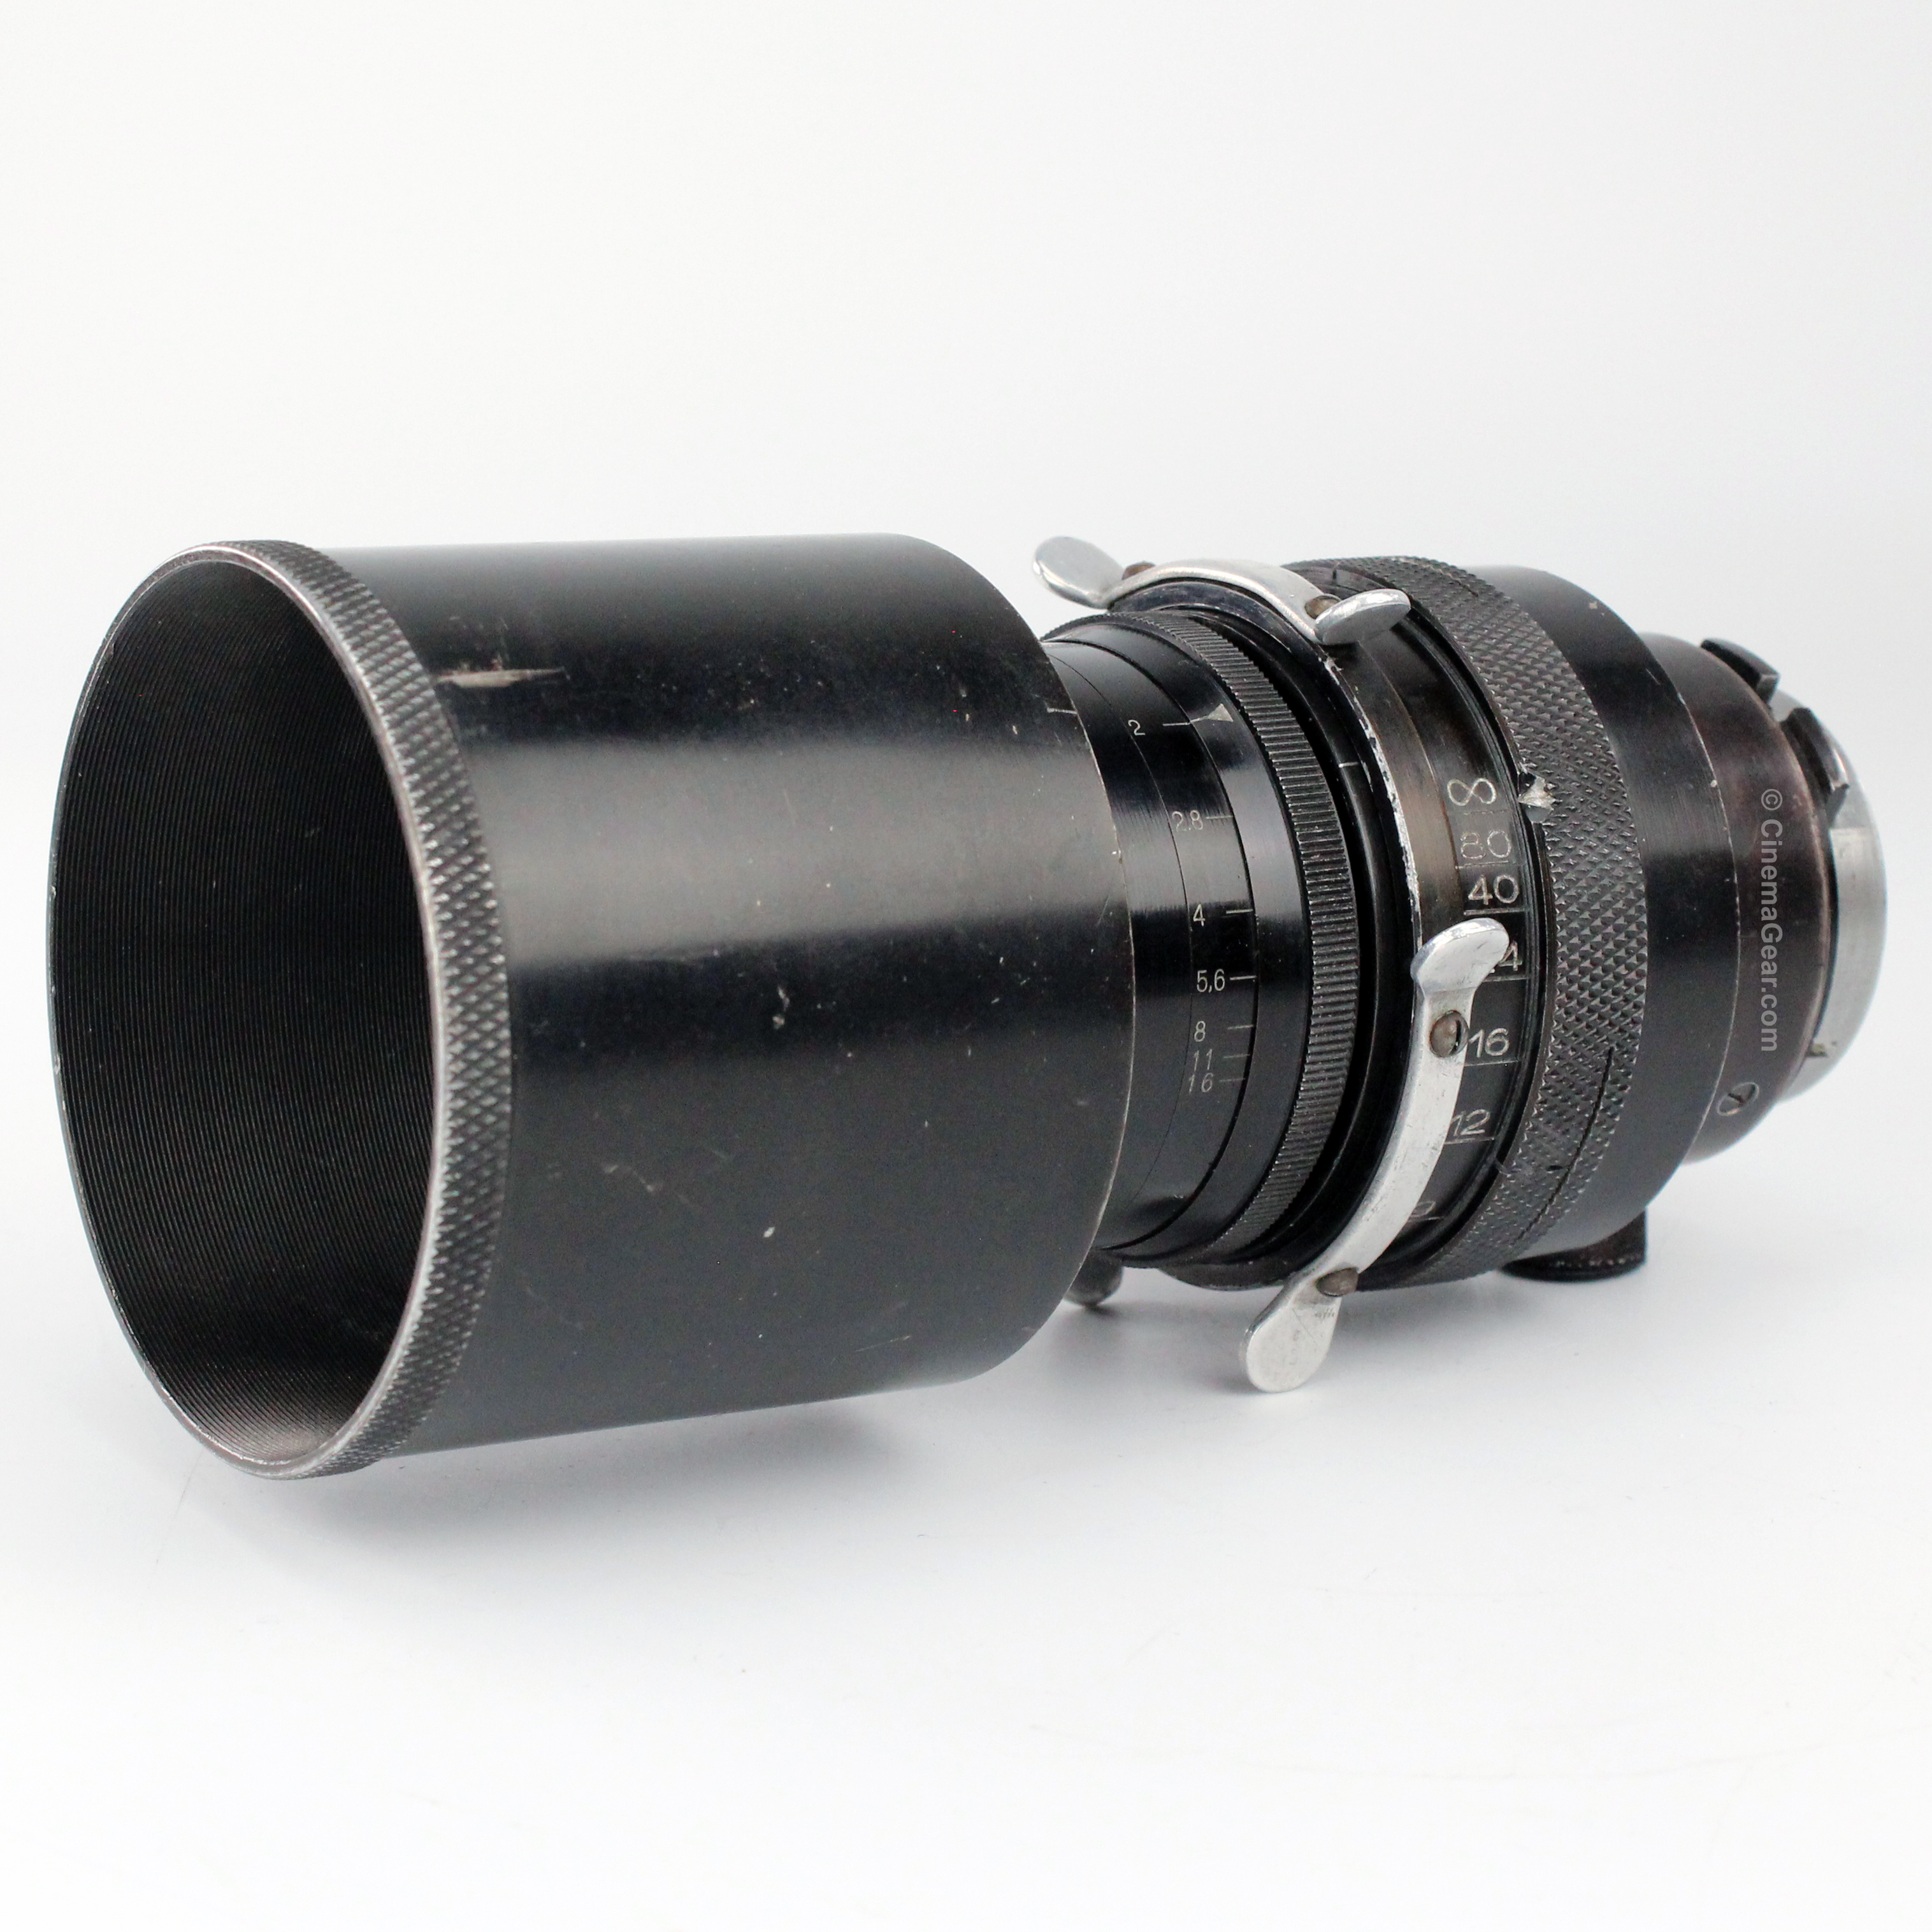 Kinoptik Apochromat 75mm f2 lens in Eclair CM3 mount